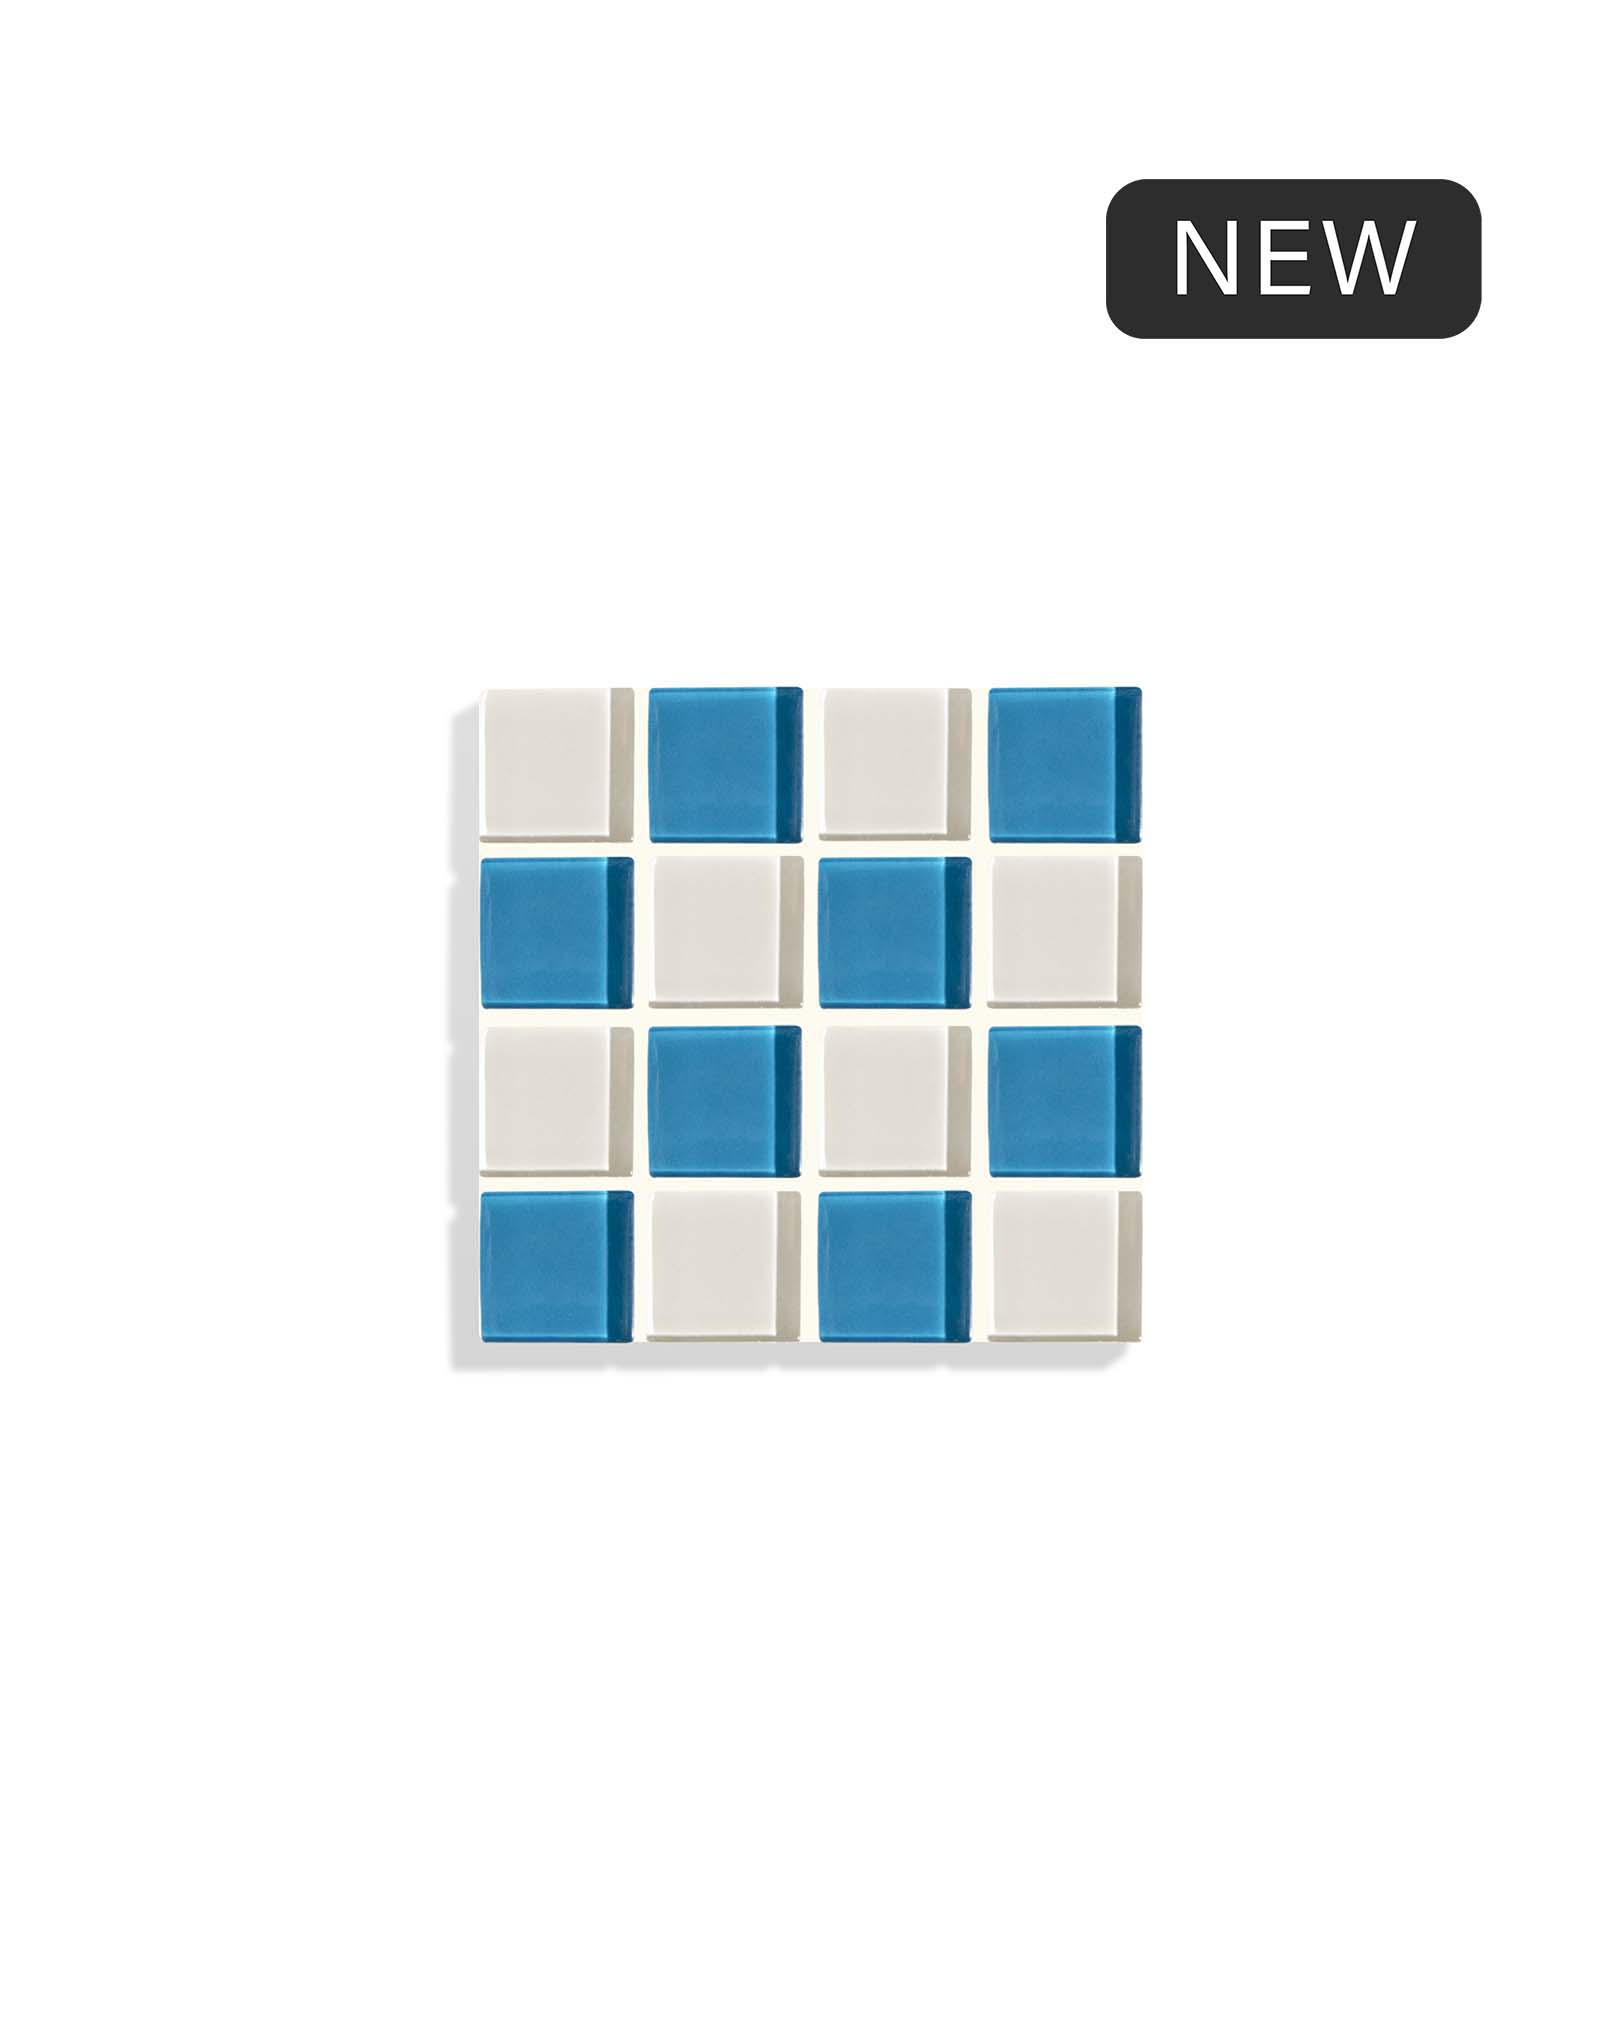 STHH Blue & White Tile Coasters - Set of 4